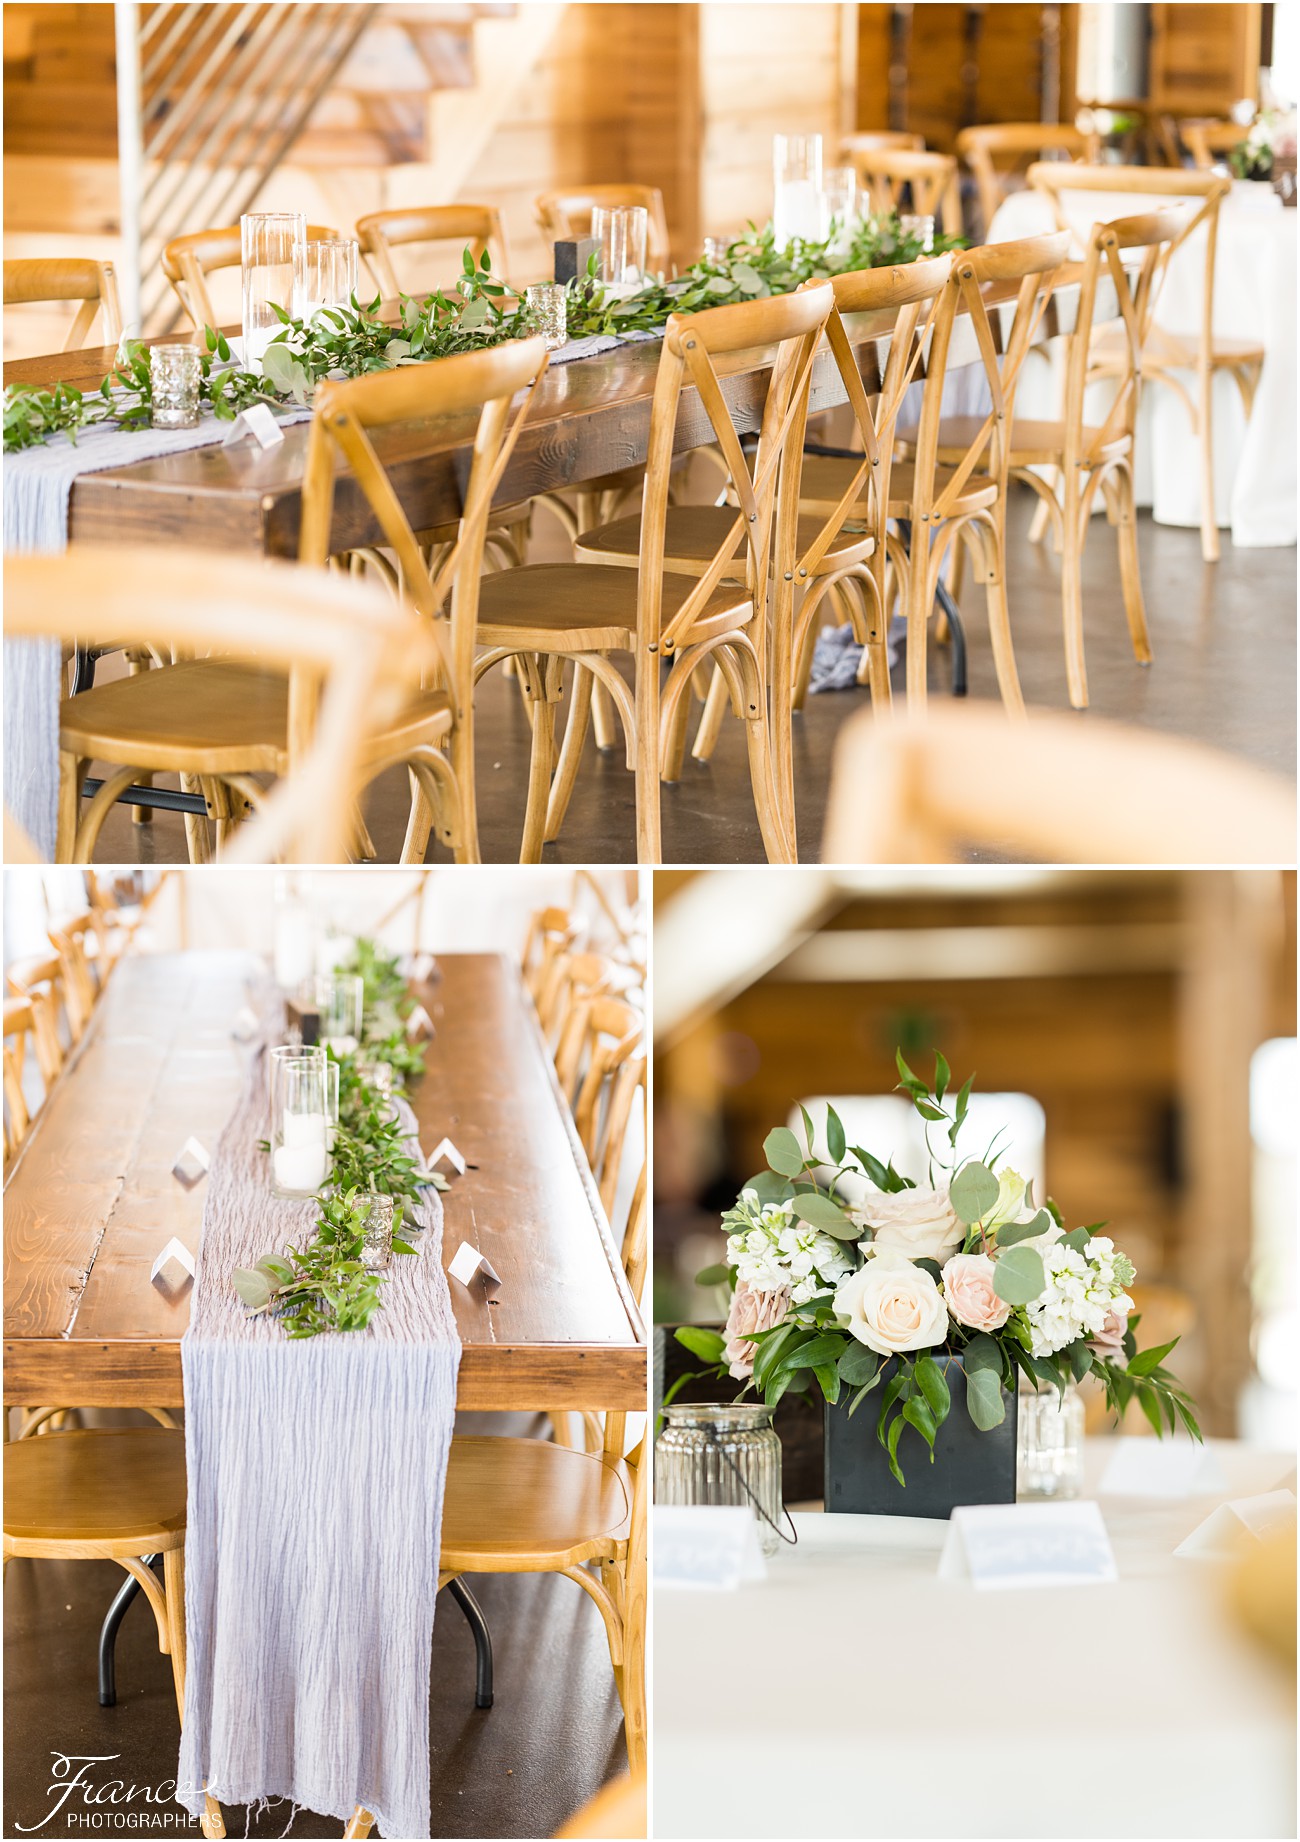 Rustic wedding reception decor with florals